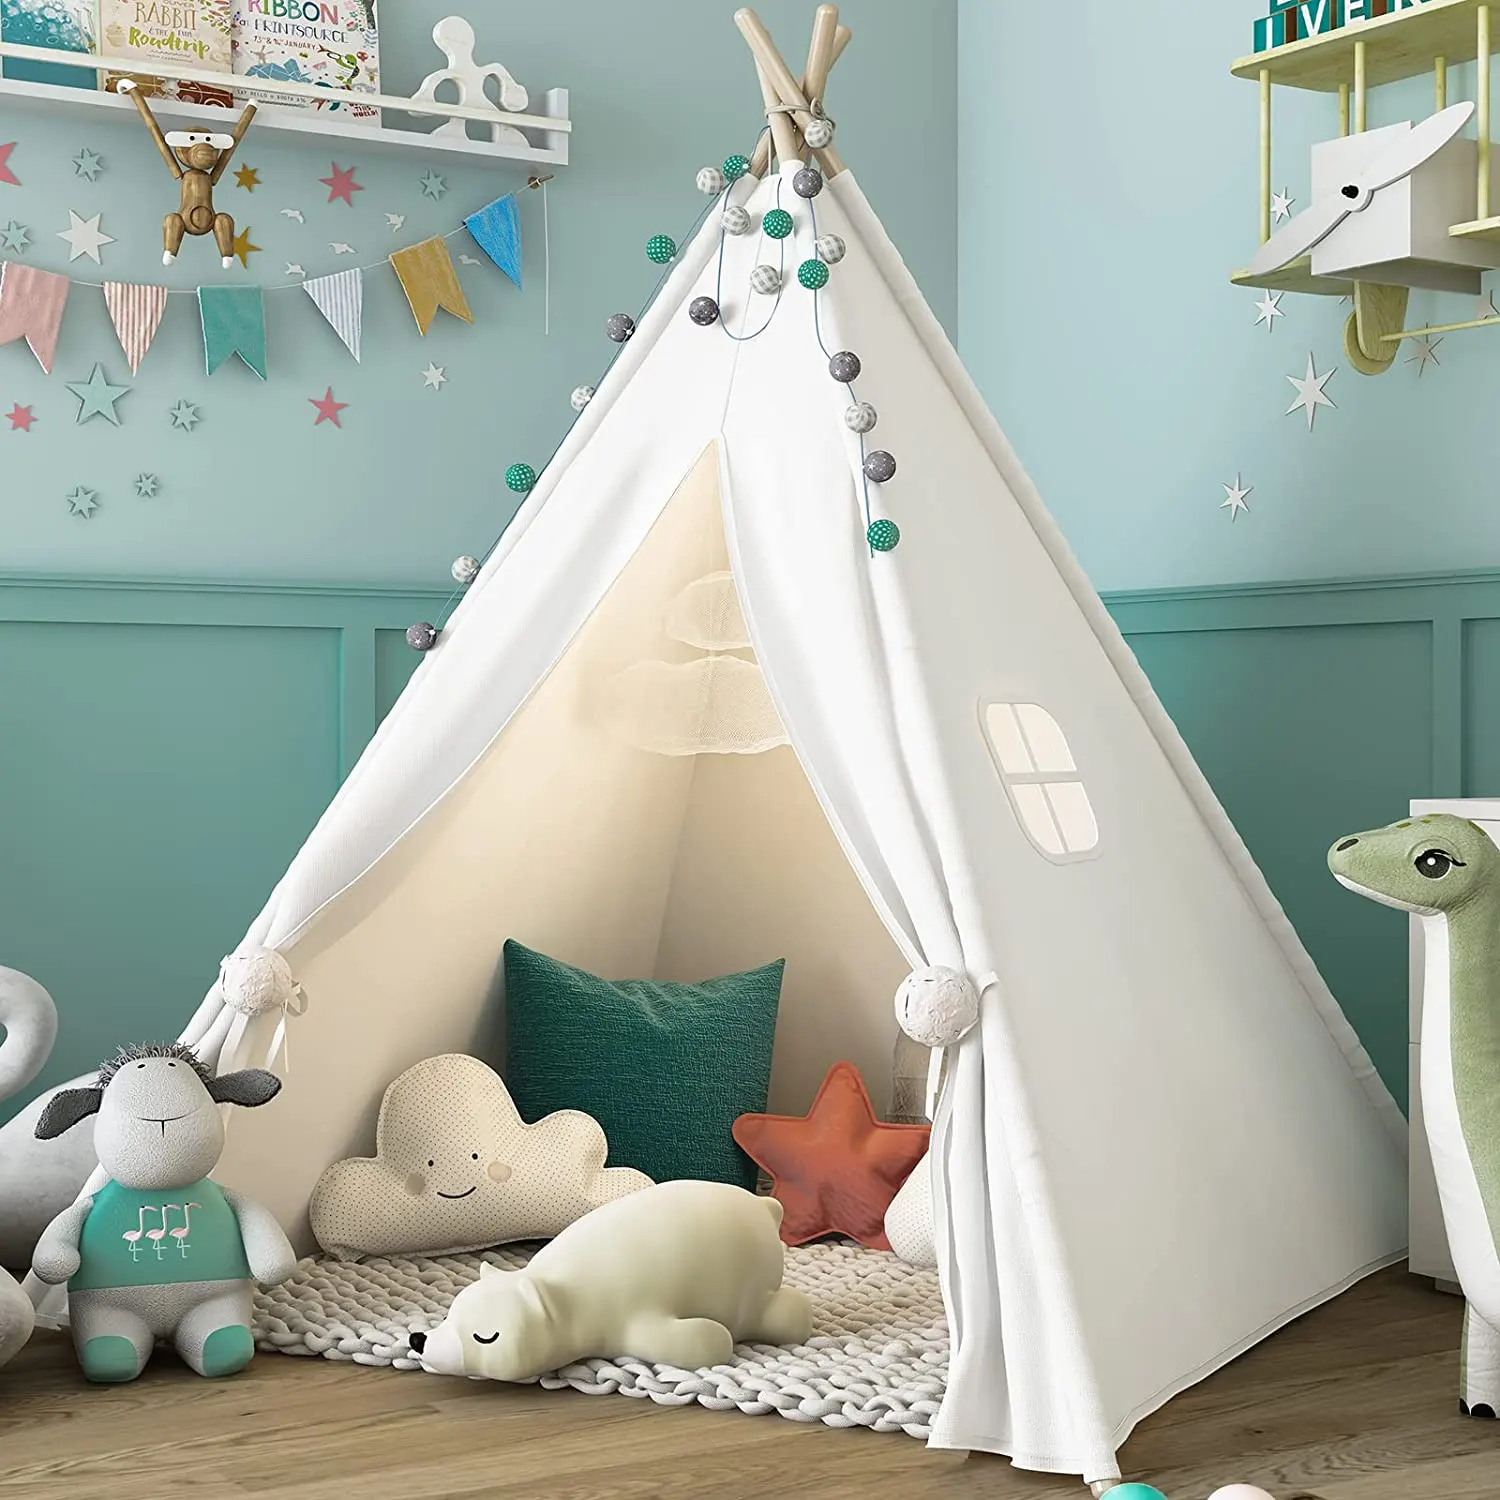 Crianças Tenda com Carry Case, Indoor & Outdoor Playing Tent Natural Canvas Teepee Play Tent Brinquedos para Meninas/Meninos